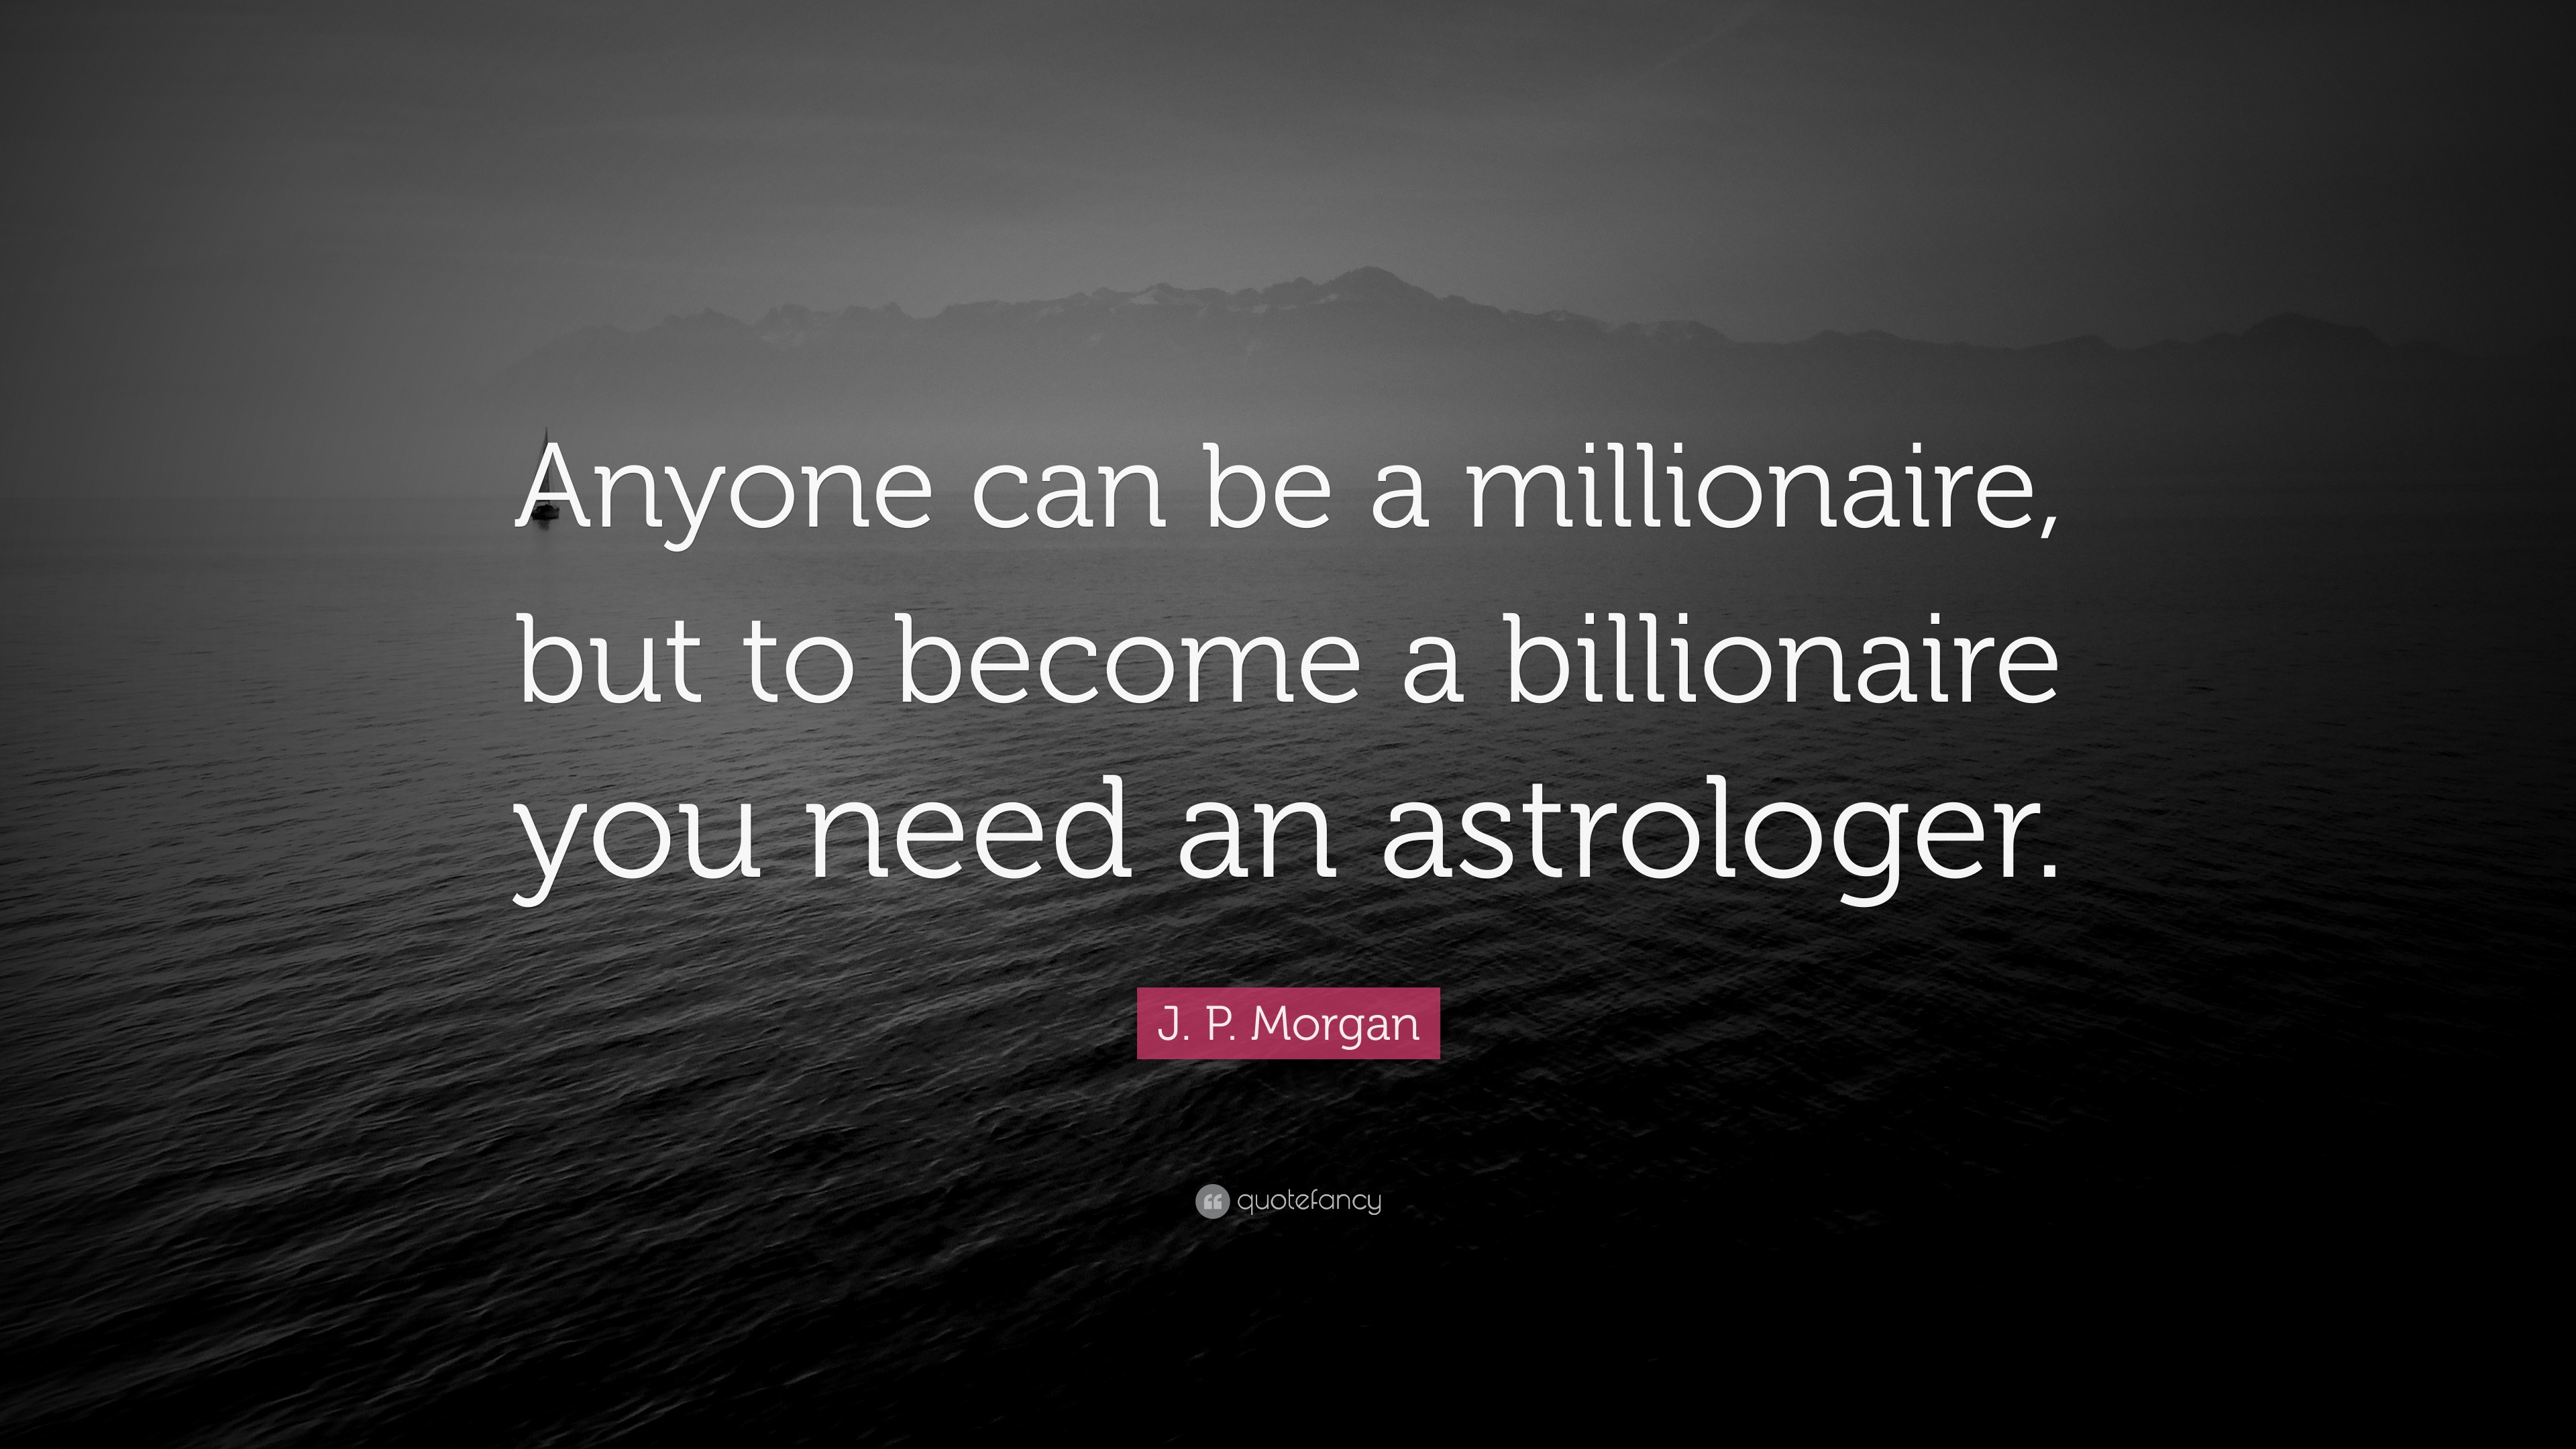 jp morgan astrology quote